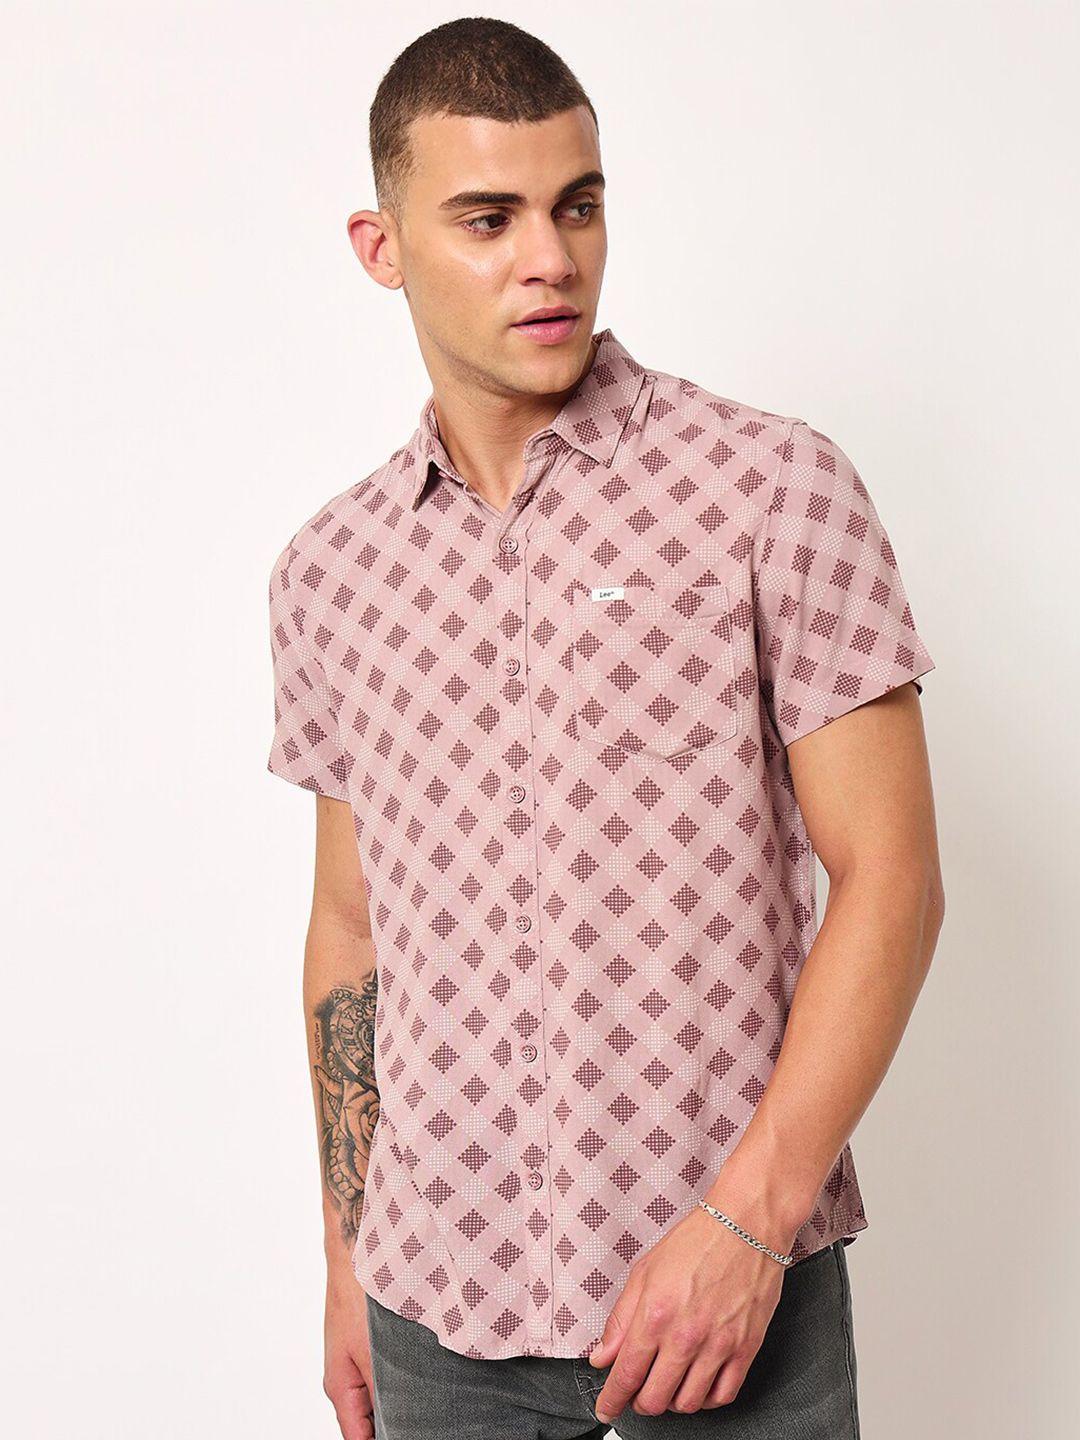 lee geometric printed spread collar cotton casual slim fit shirt